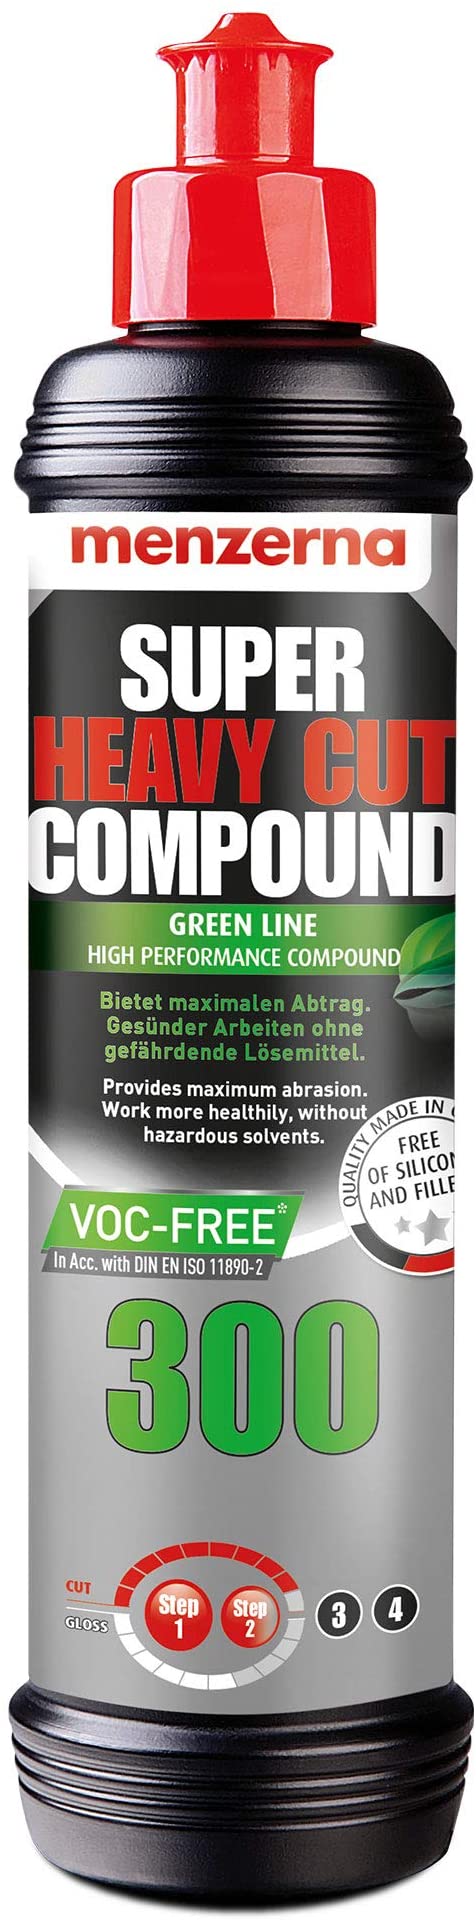 Super Heavy Cut Compound 300 (Green Line) スパーヘビーカットコンパウンド 300 グリーンライン(250ml / 1kg)